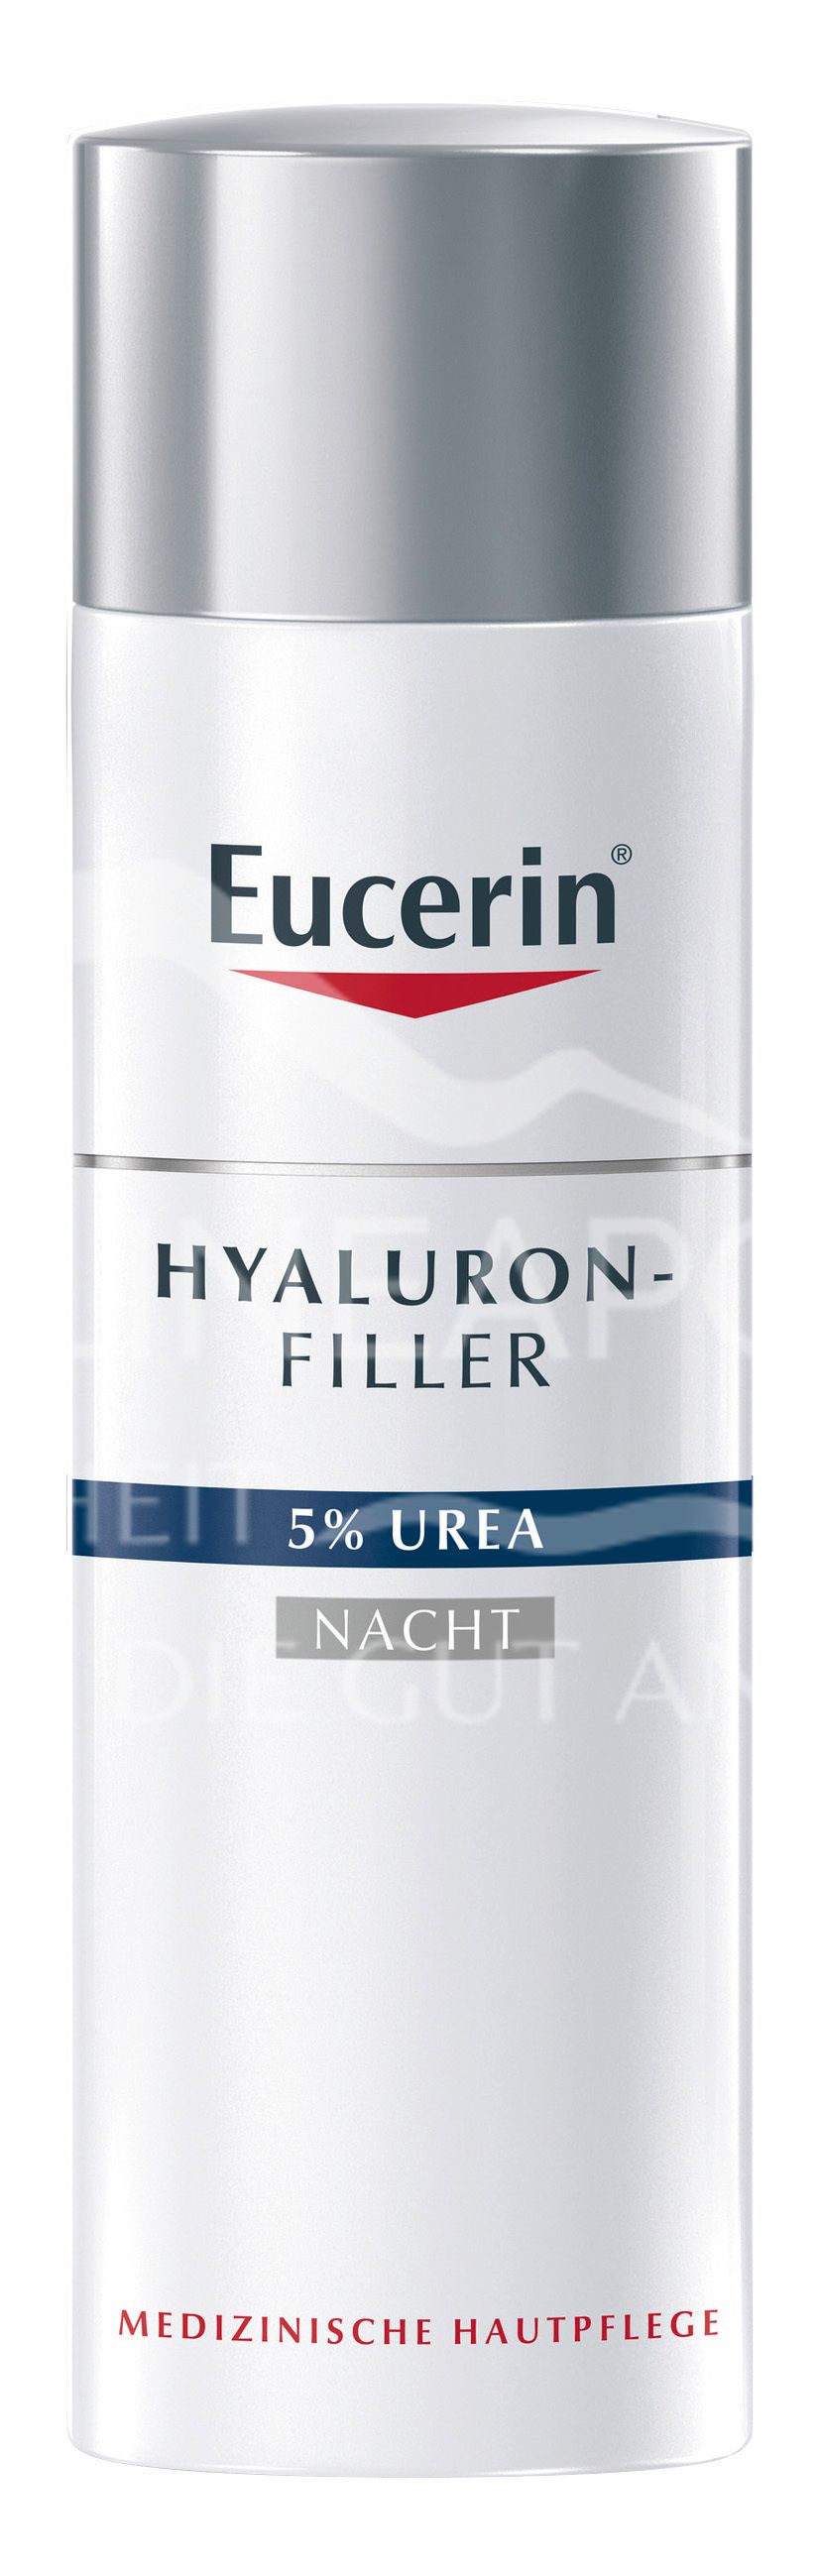 Eucerin® HYALURON-FILLER 5% Urea Nachtcreme